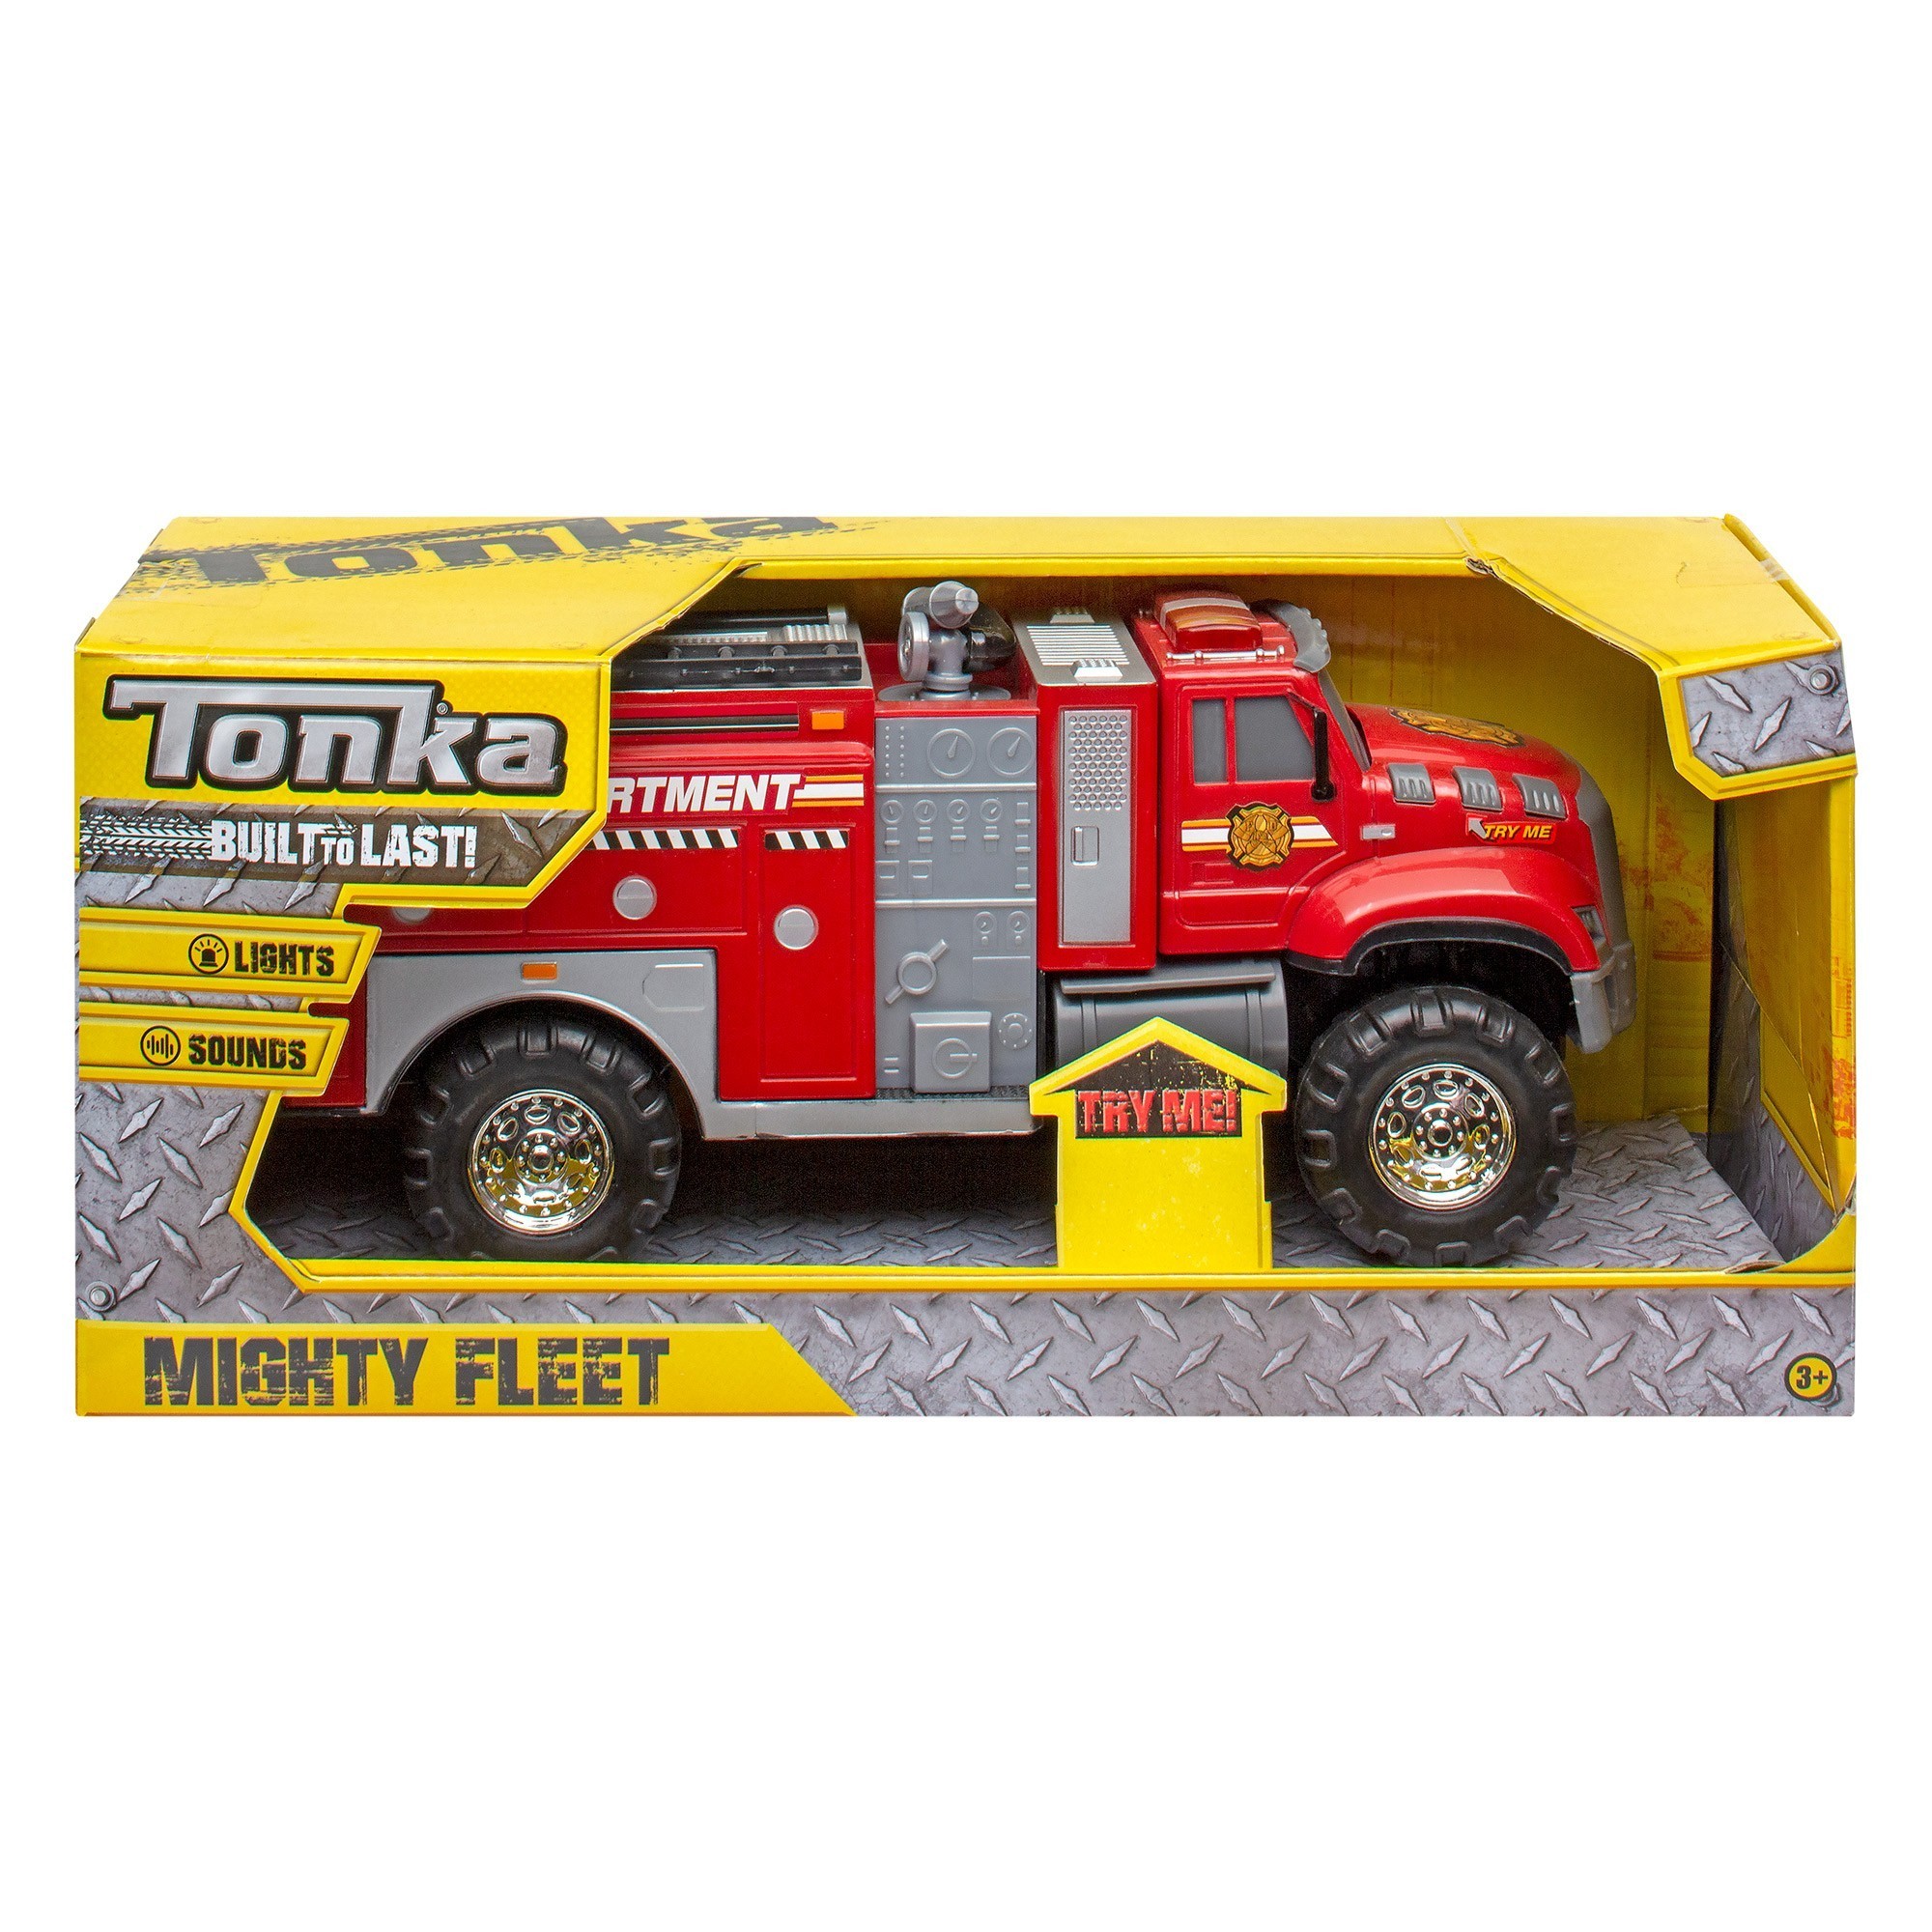 Tonka - Mighty Fleet Vehicle - Rugged Fire Engine